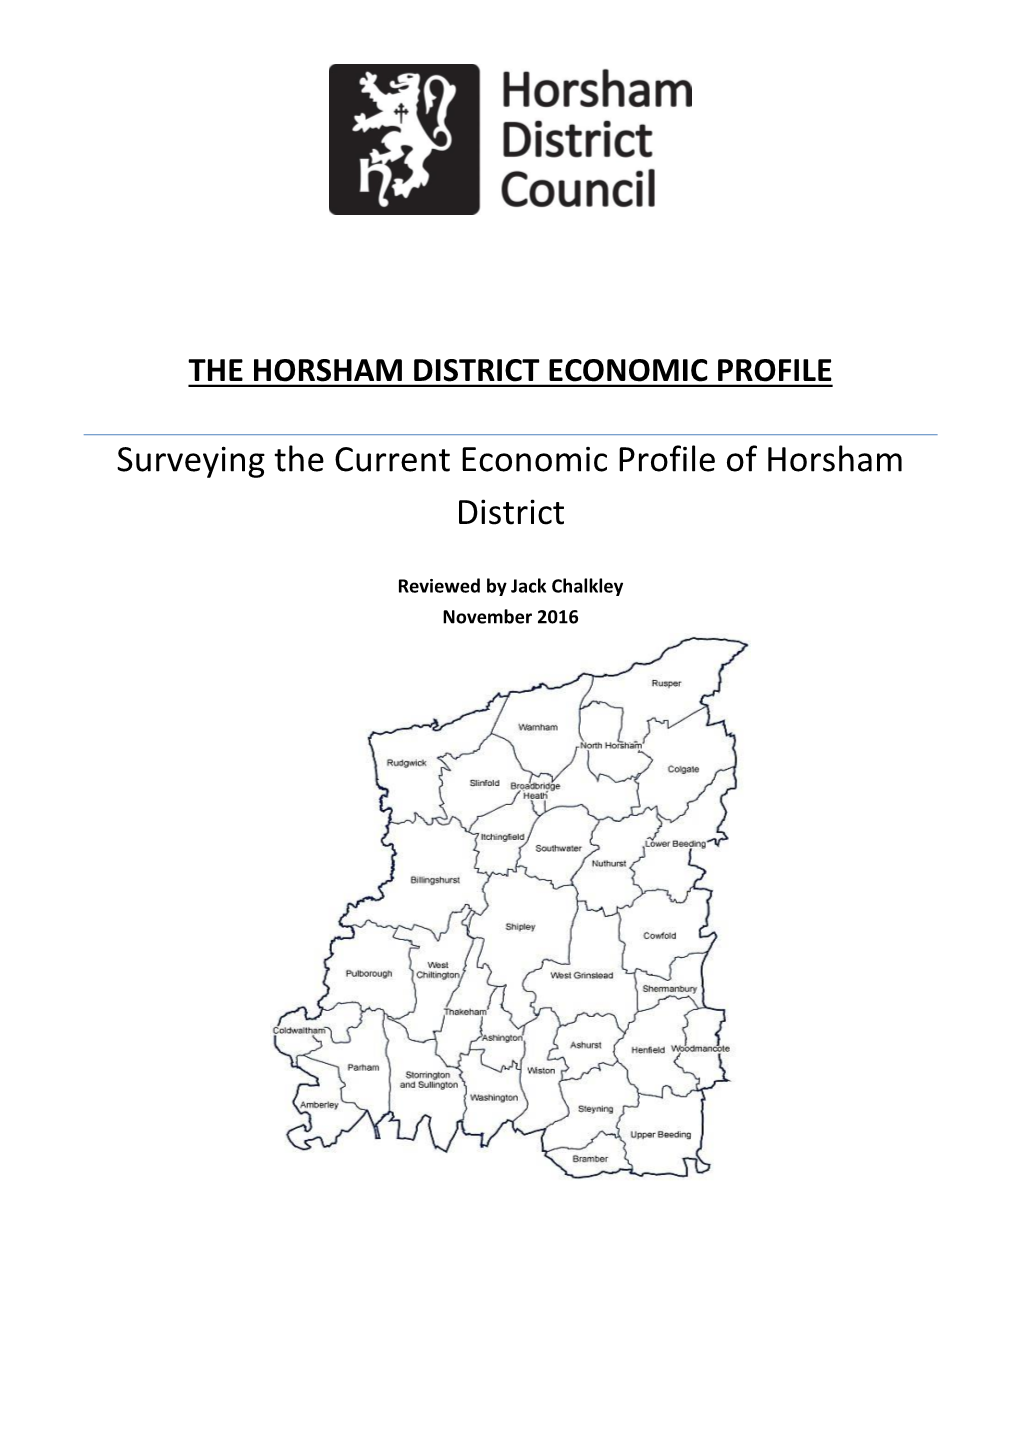 The Horsham District Economic Profile